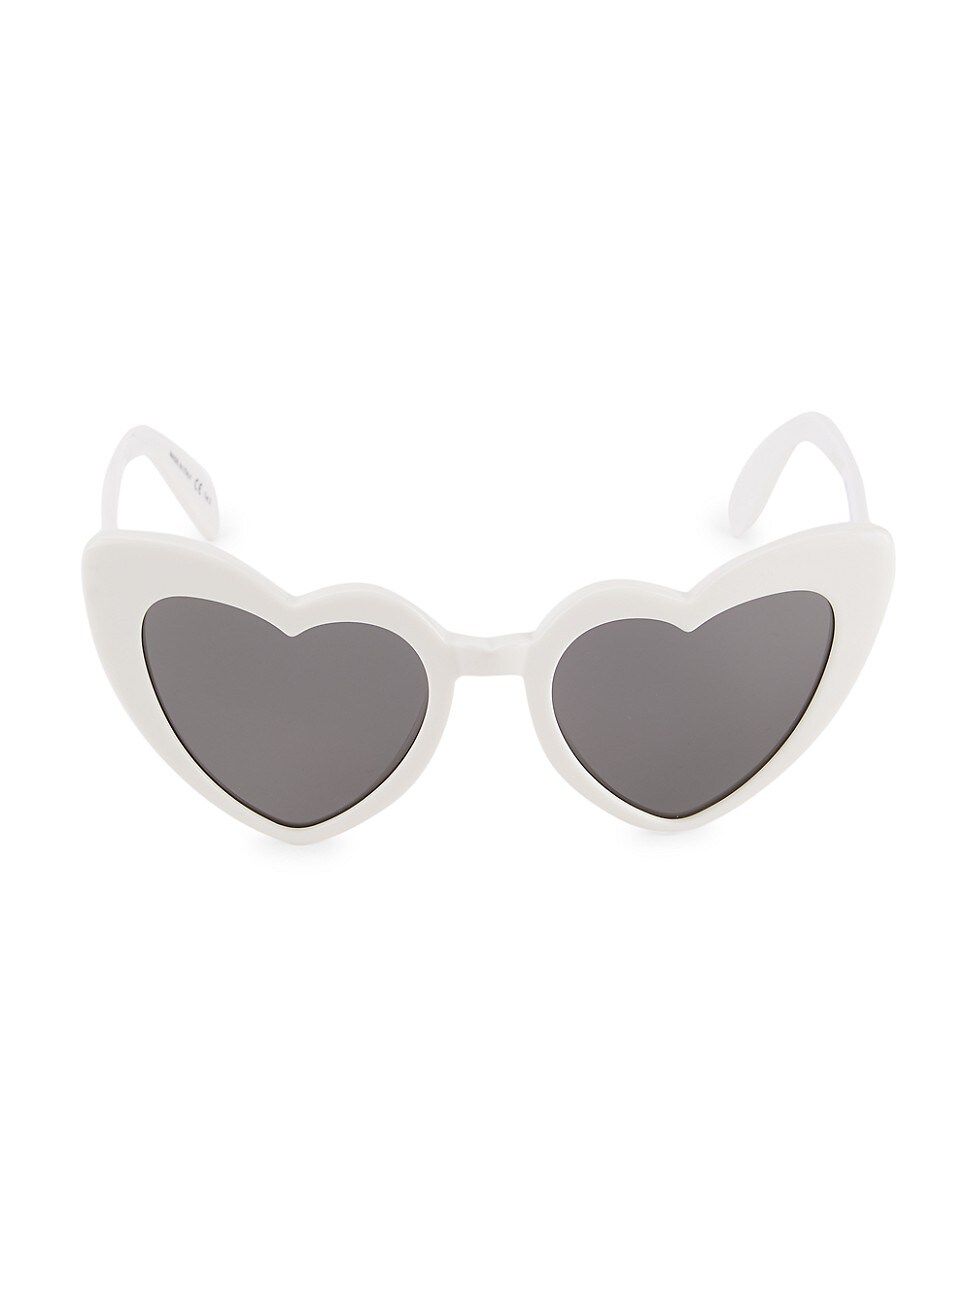 Saint Laurent Women's Loulou 54MM Heart Sunglasses - Ivory | Saks Fifth Avenue